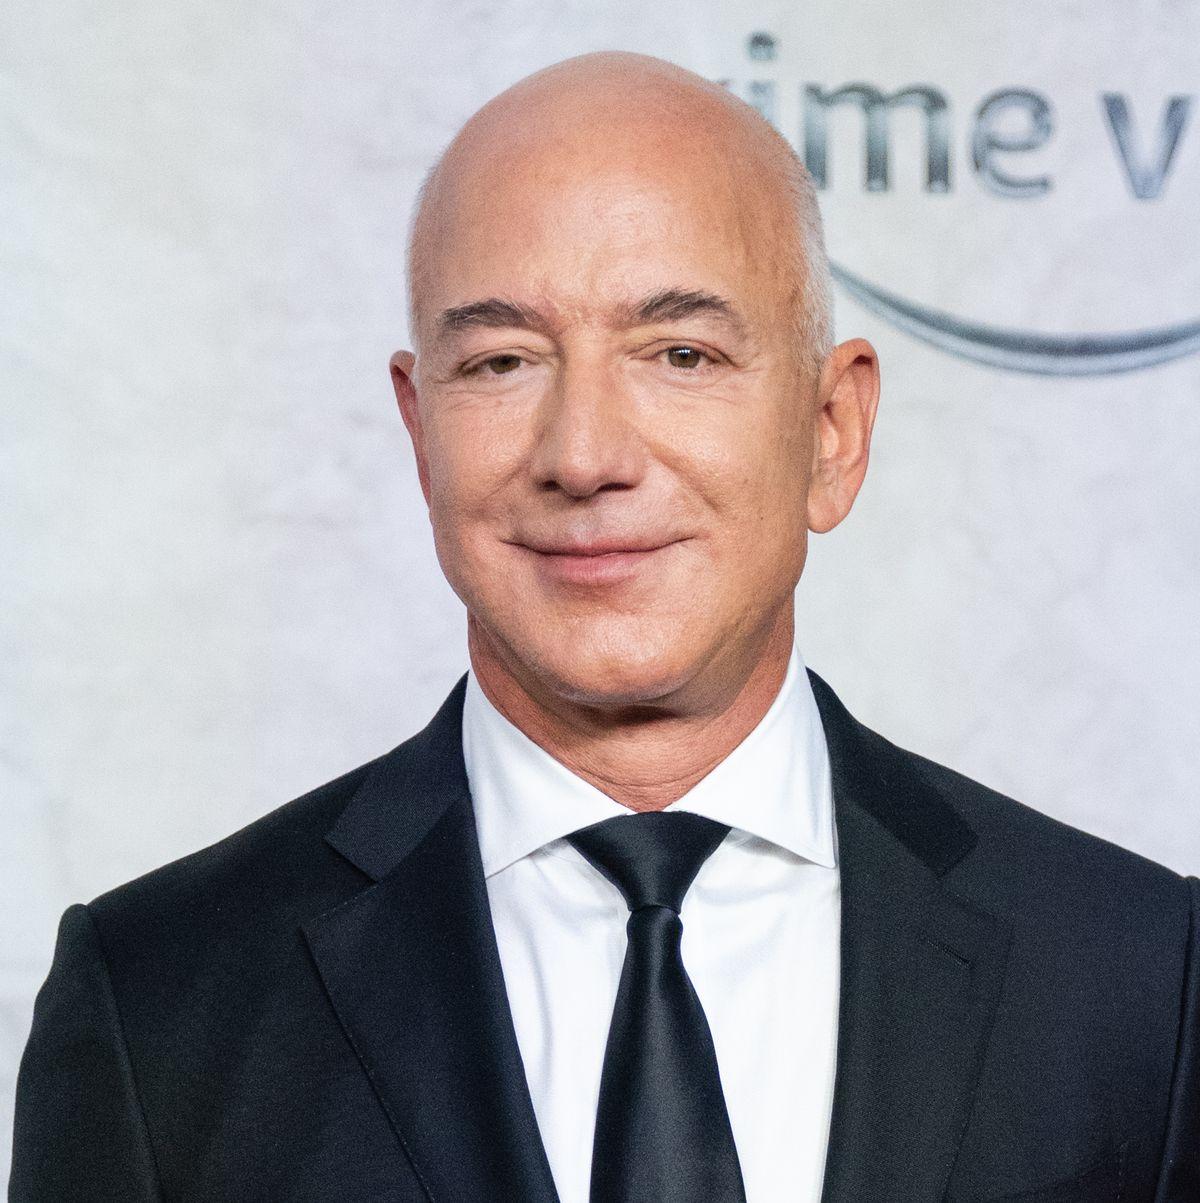 Jeff Bezos: Biography, Amazon Founder, Blue Origin Founder